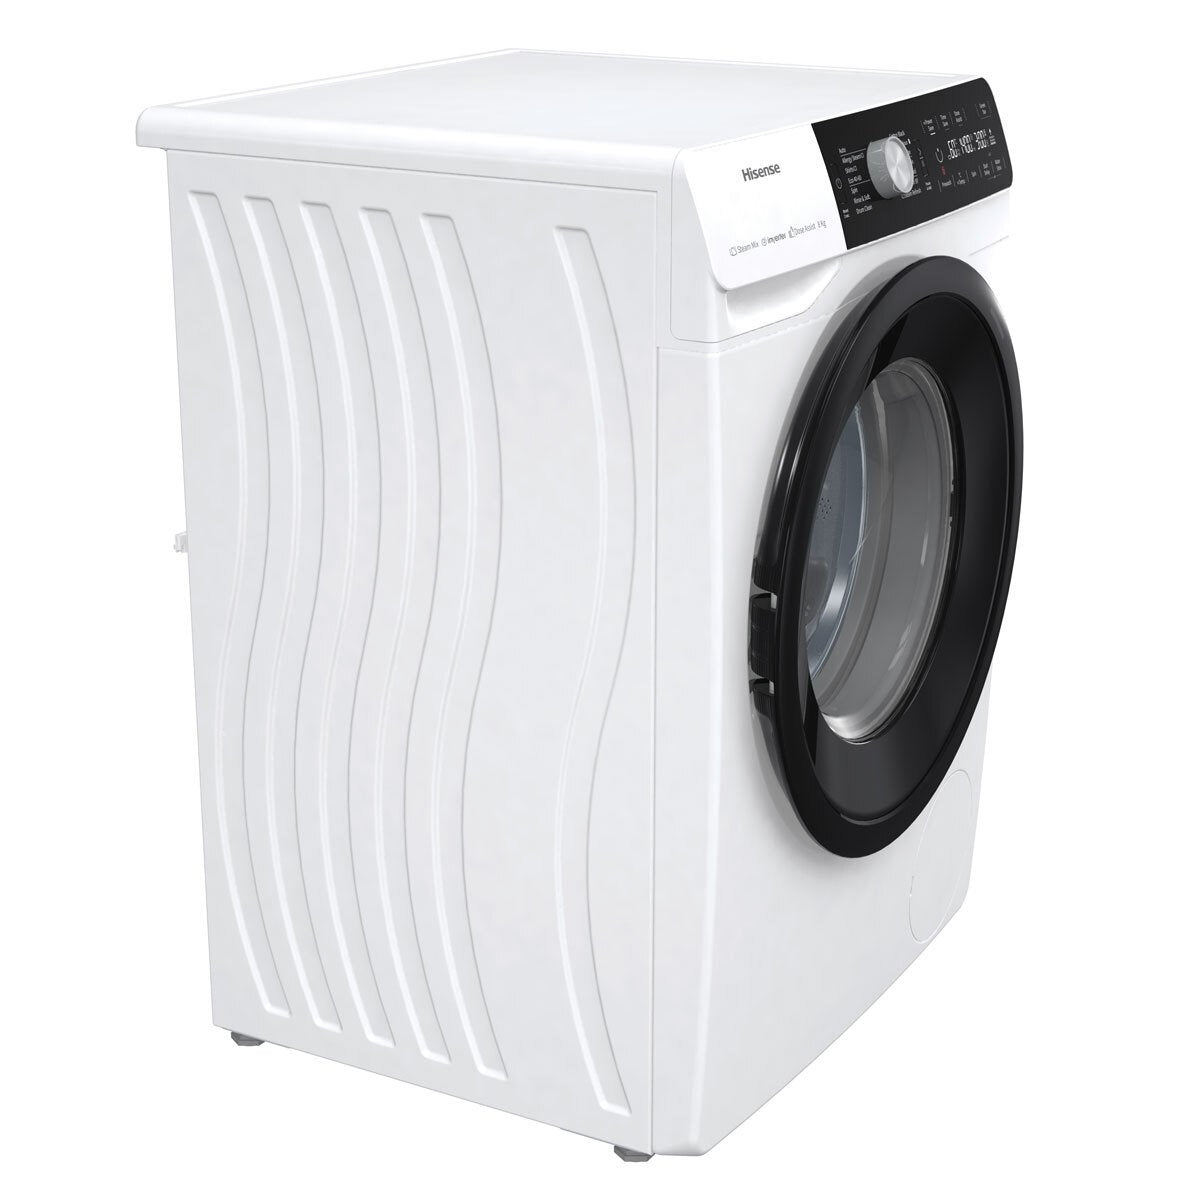 Hisense WFGA80141VM, 8kg, 1400rpm Washing Machine, B Rated in White